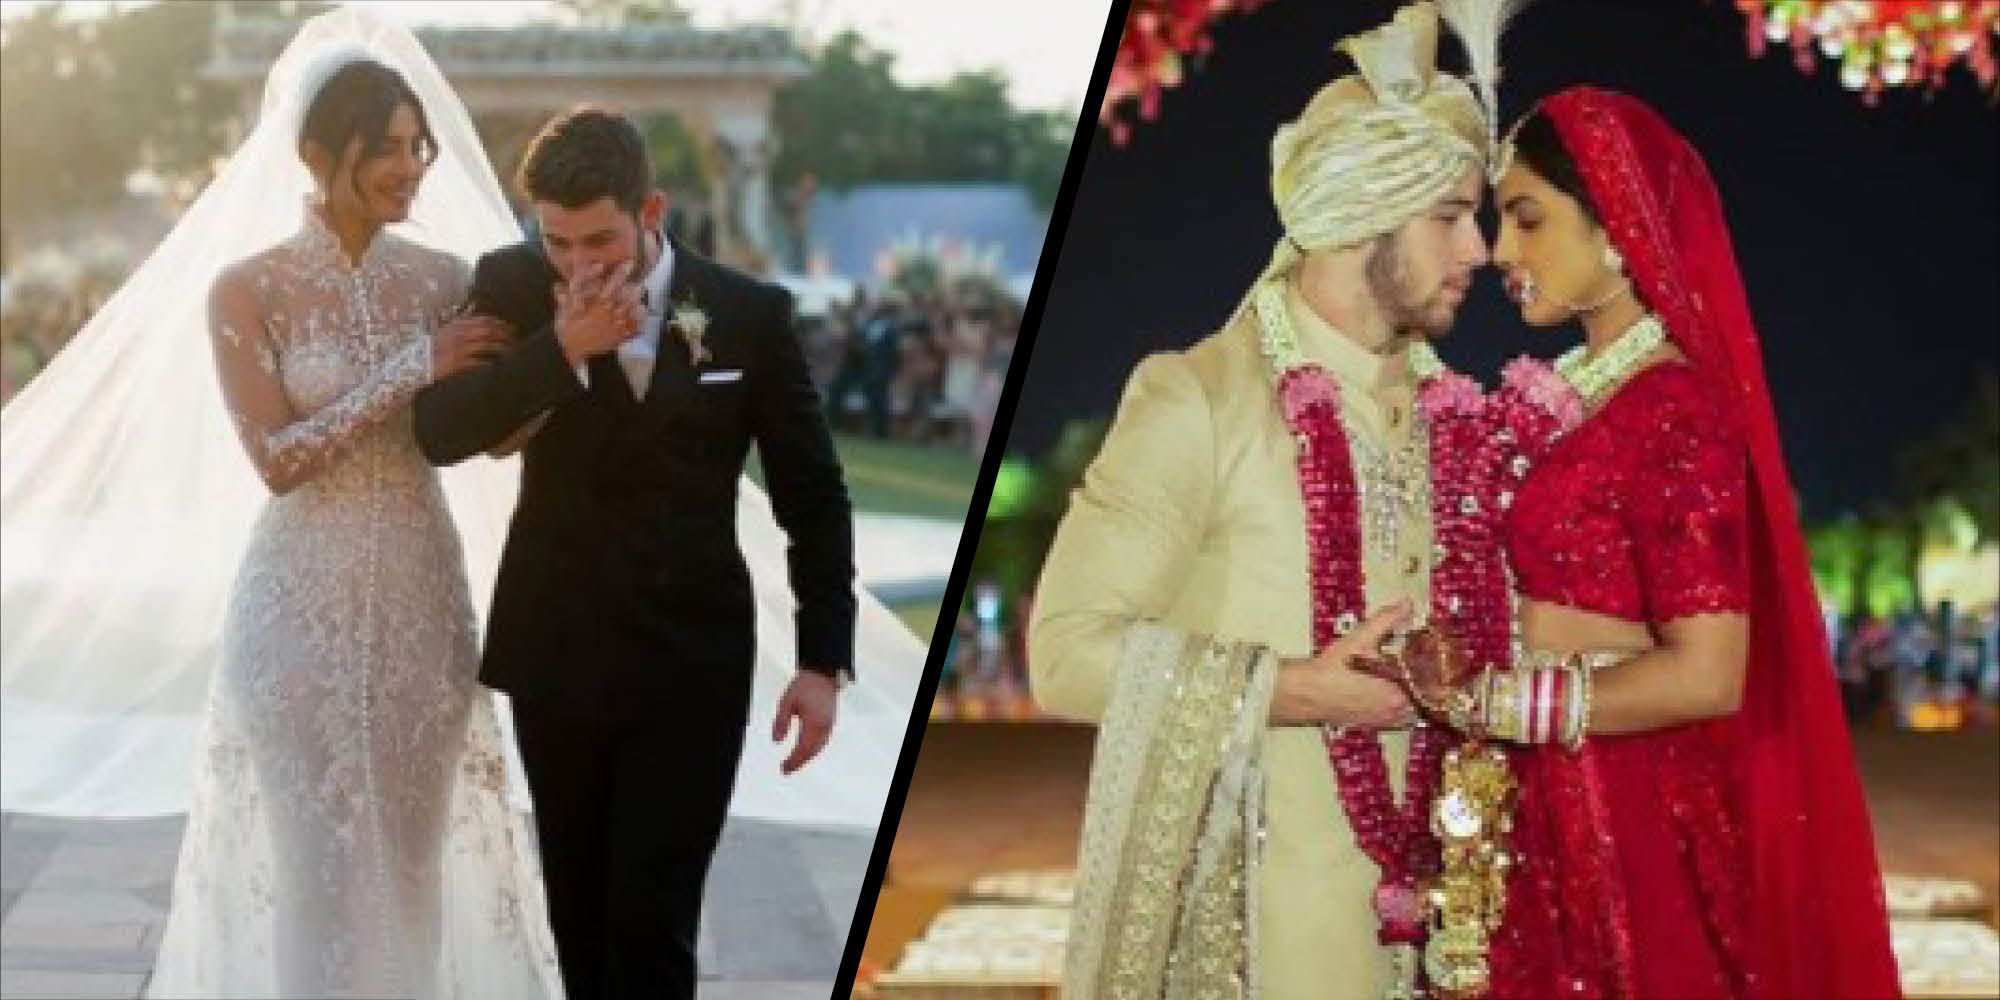 Video shows tiny unseen details in Priyanka Chopra's wedding dress |  Mashable